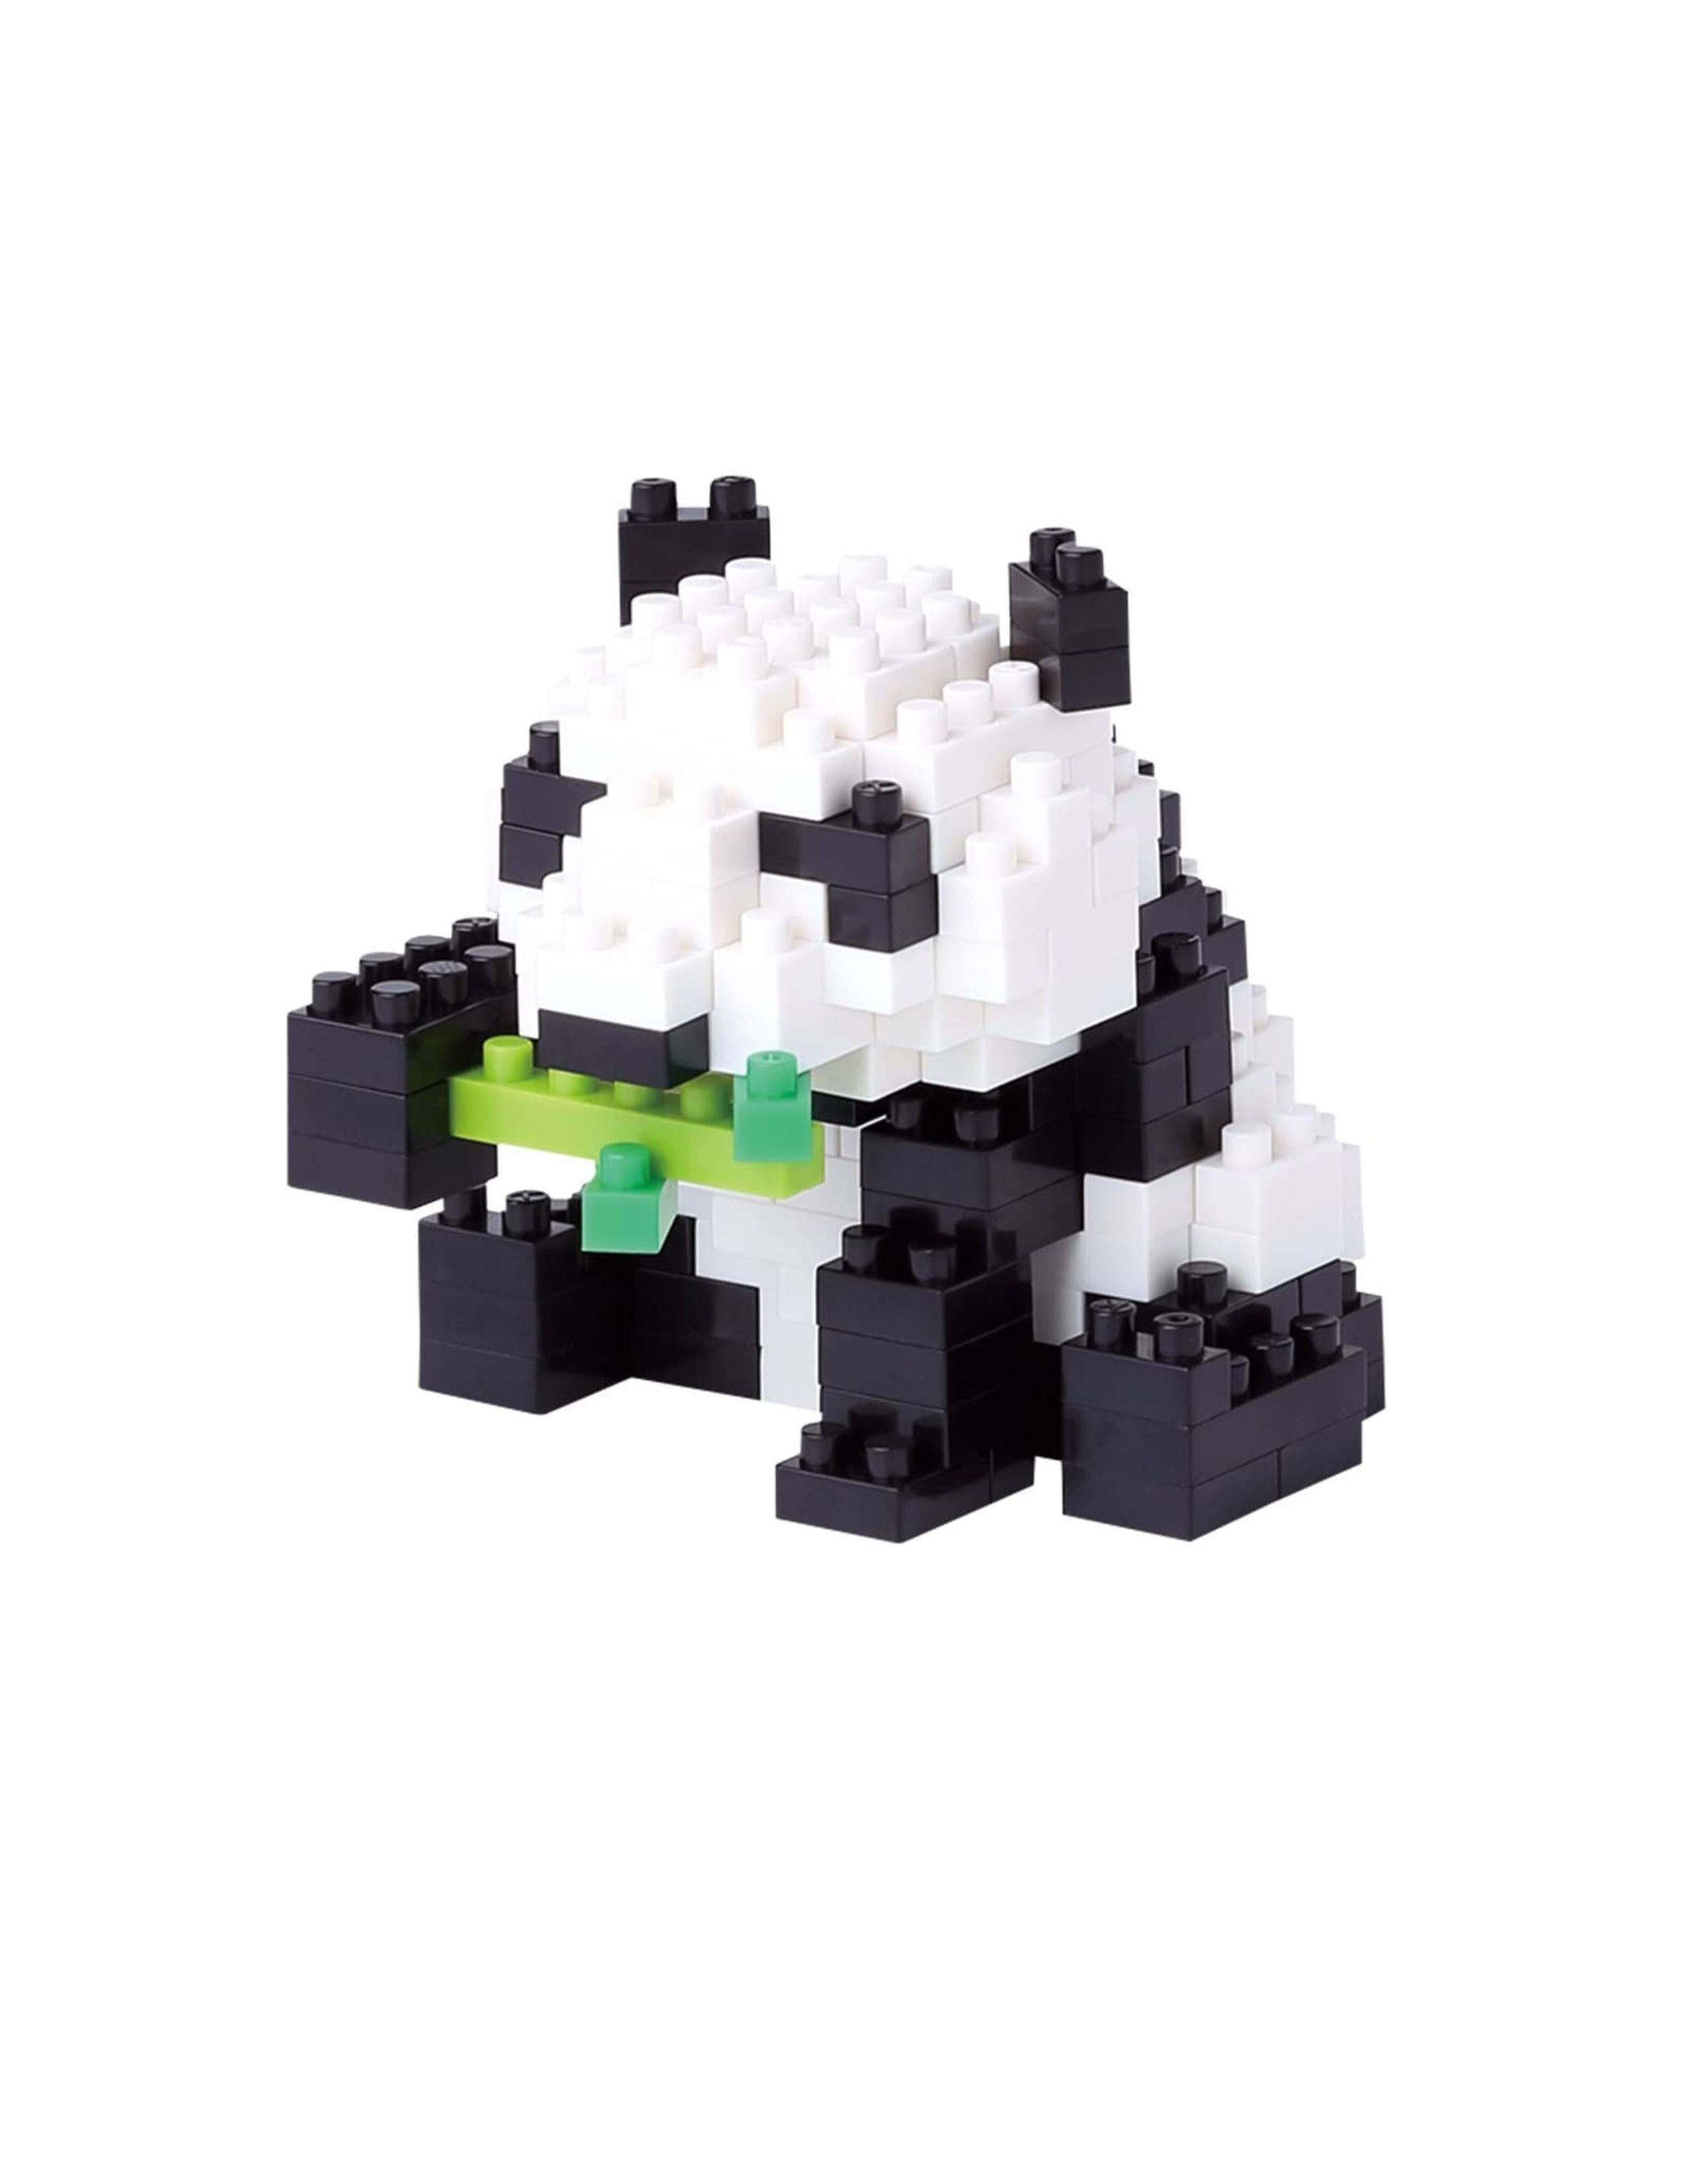 Giant Panda Nanoblock Micro-Sized Building Block Construction Toy Micro Brick